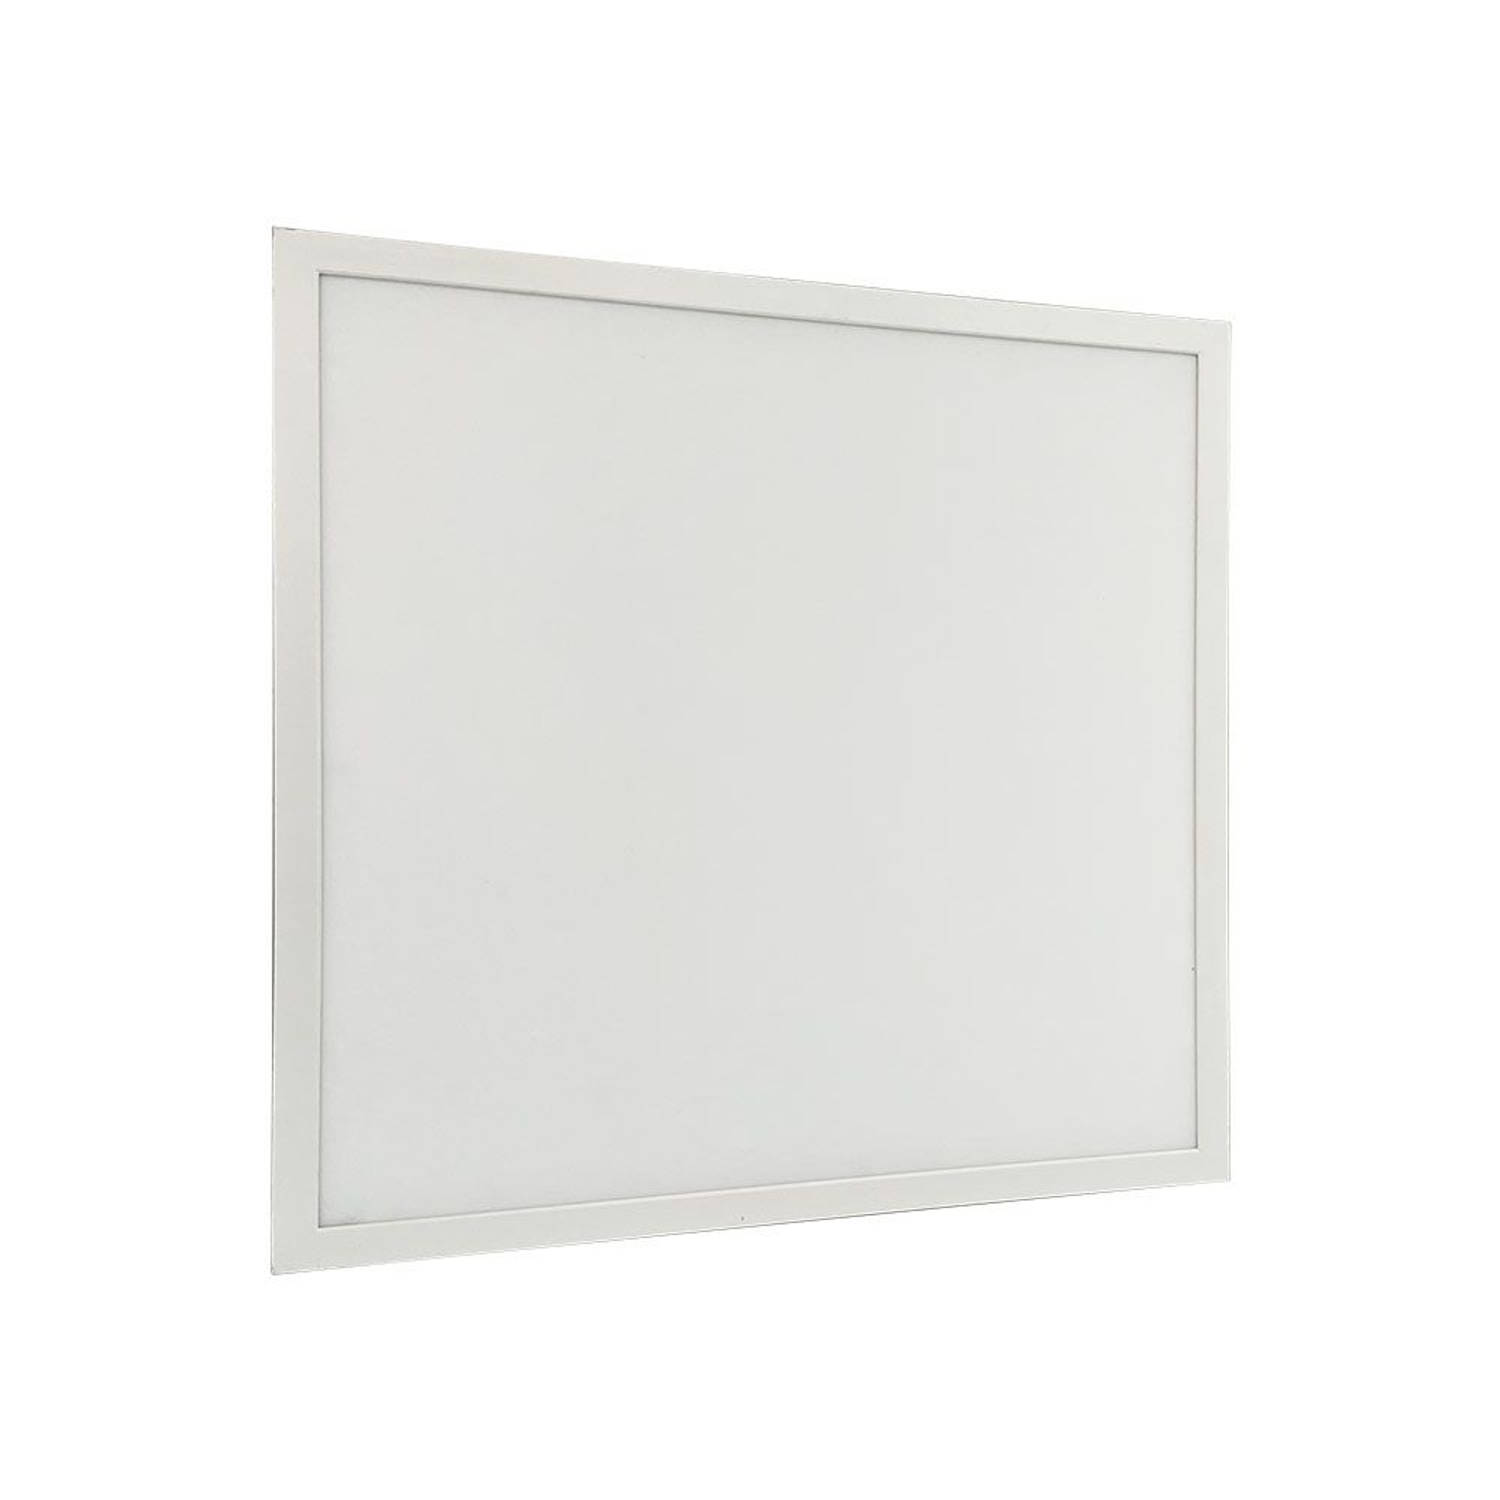 LED Panel 600x600mm - 40W - White 6500K - SMD - White - Square - Aluminium - 595x595x9mm - IP20 - 25000 H. Long Life - Pack of 6